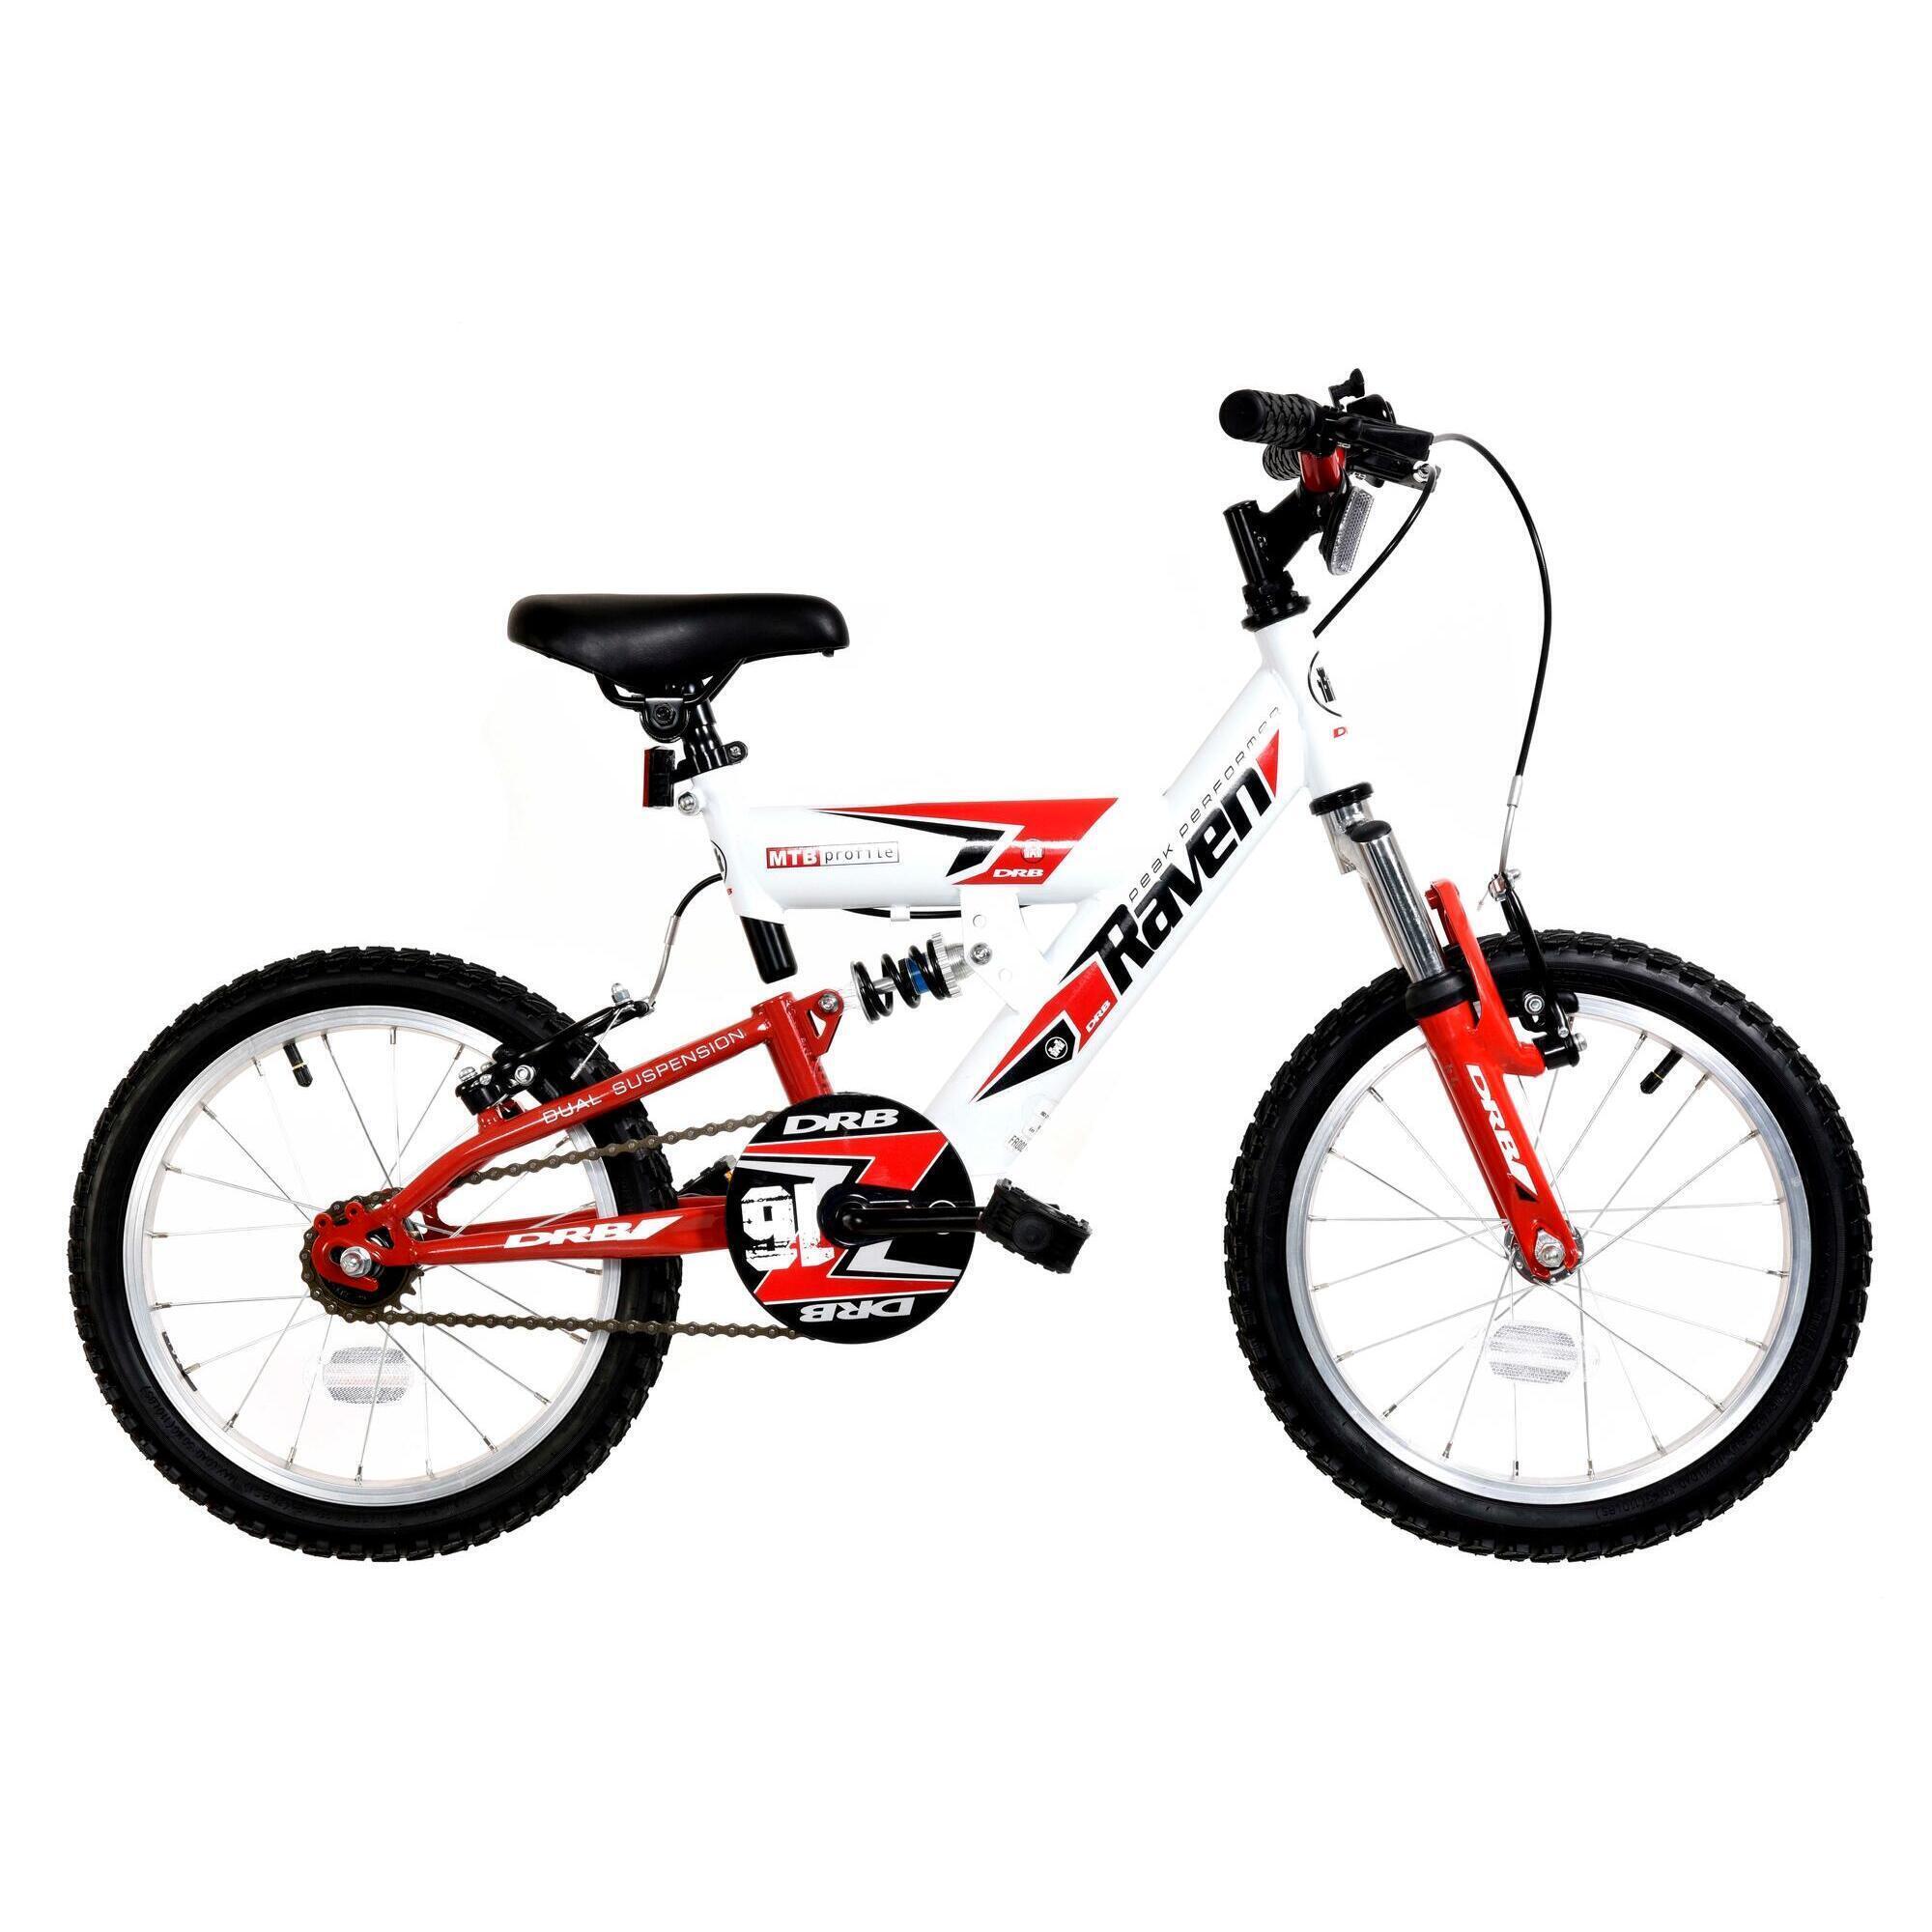 DALLINGRIDGE Dallingridge Raven Boys Full Suspension Mountain Bike, 16In Wheel - White/Red